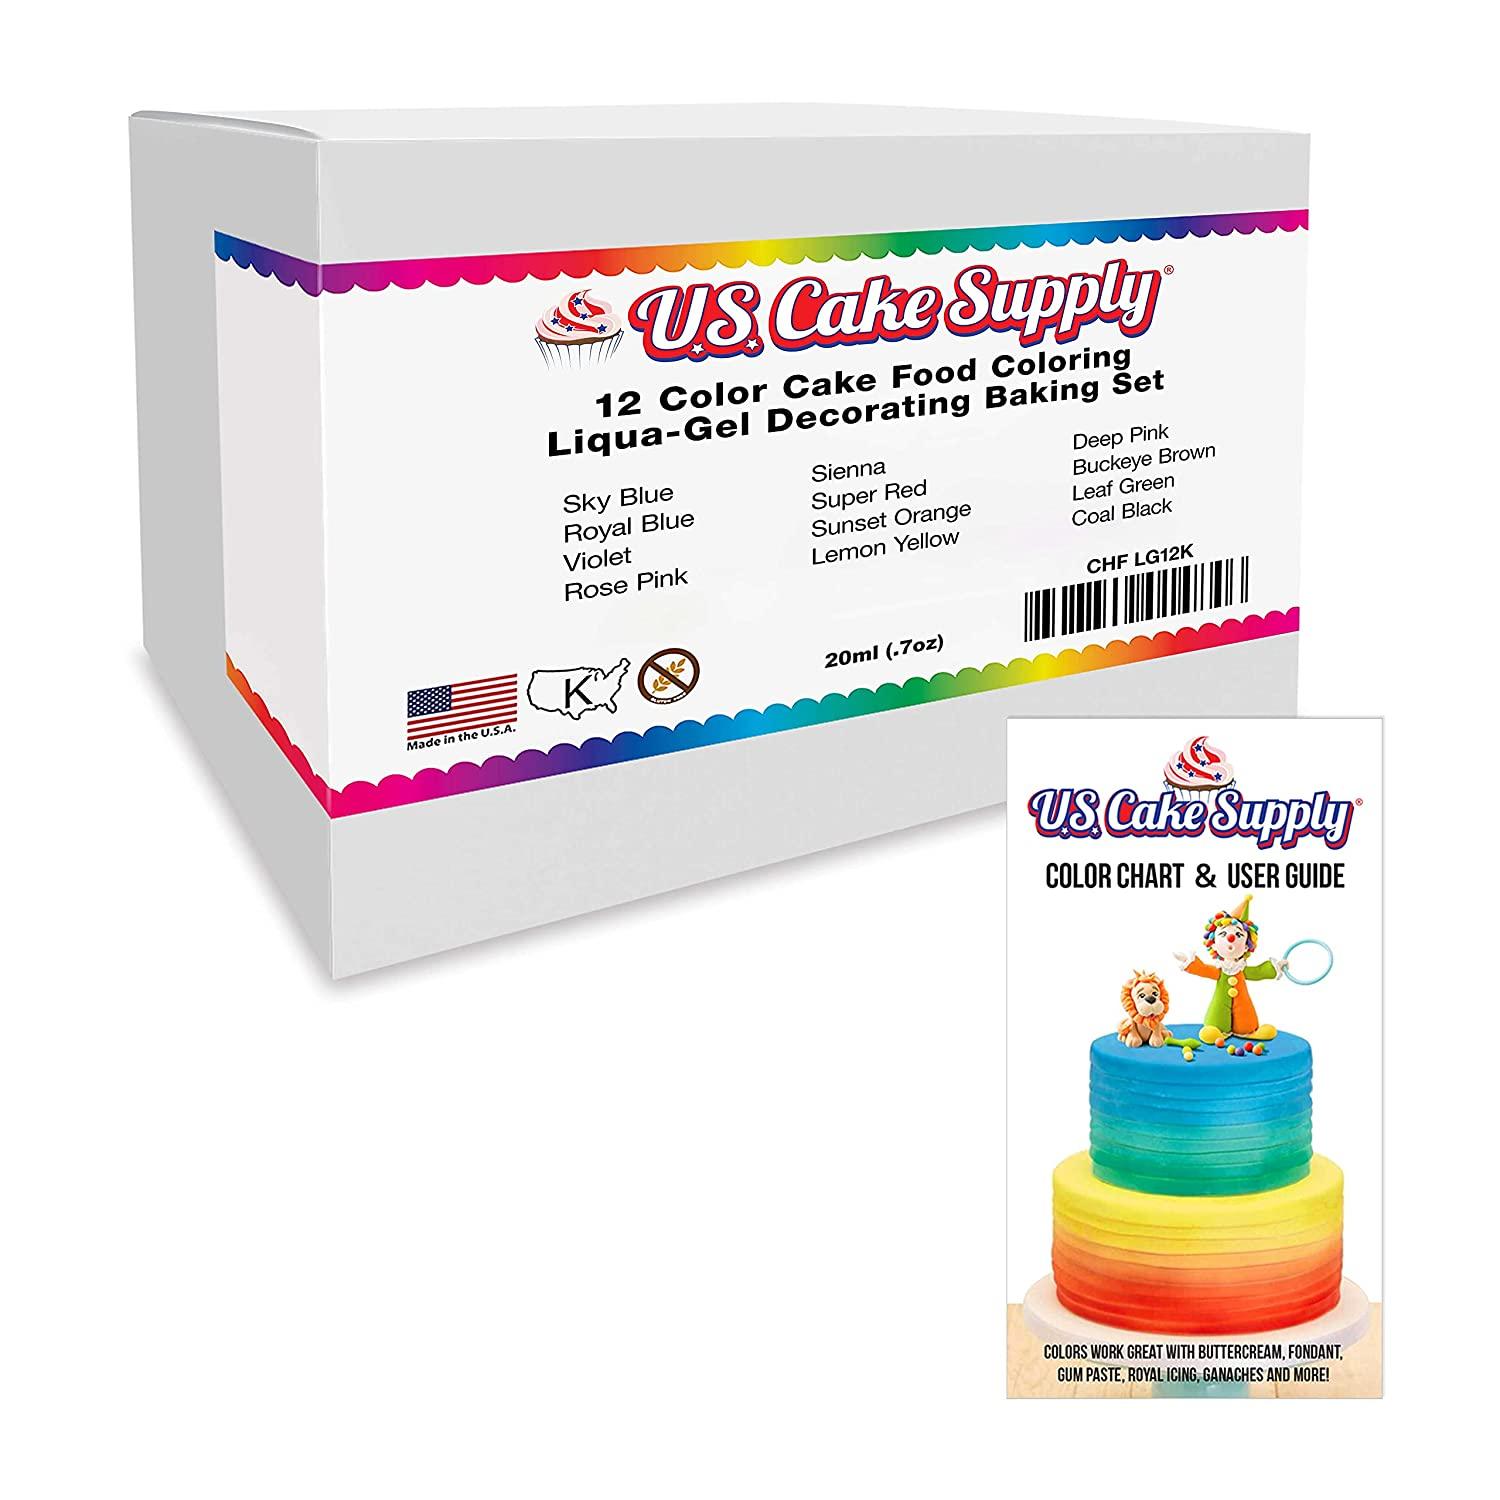 U.S. Cake Supply 12 Color Cake Food Coloring Liqua-Gel Decorating ...